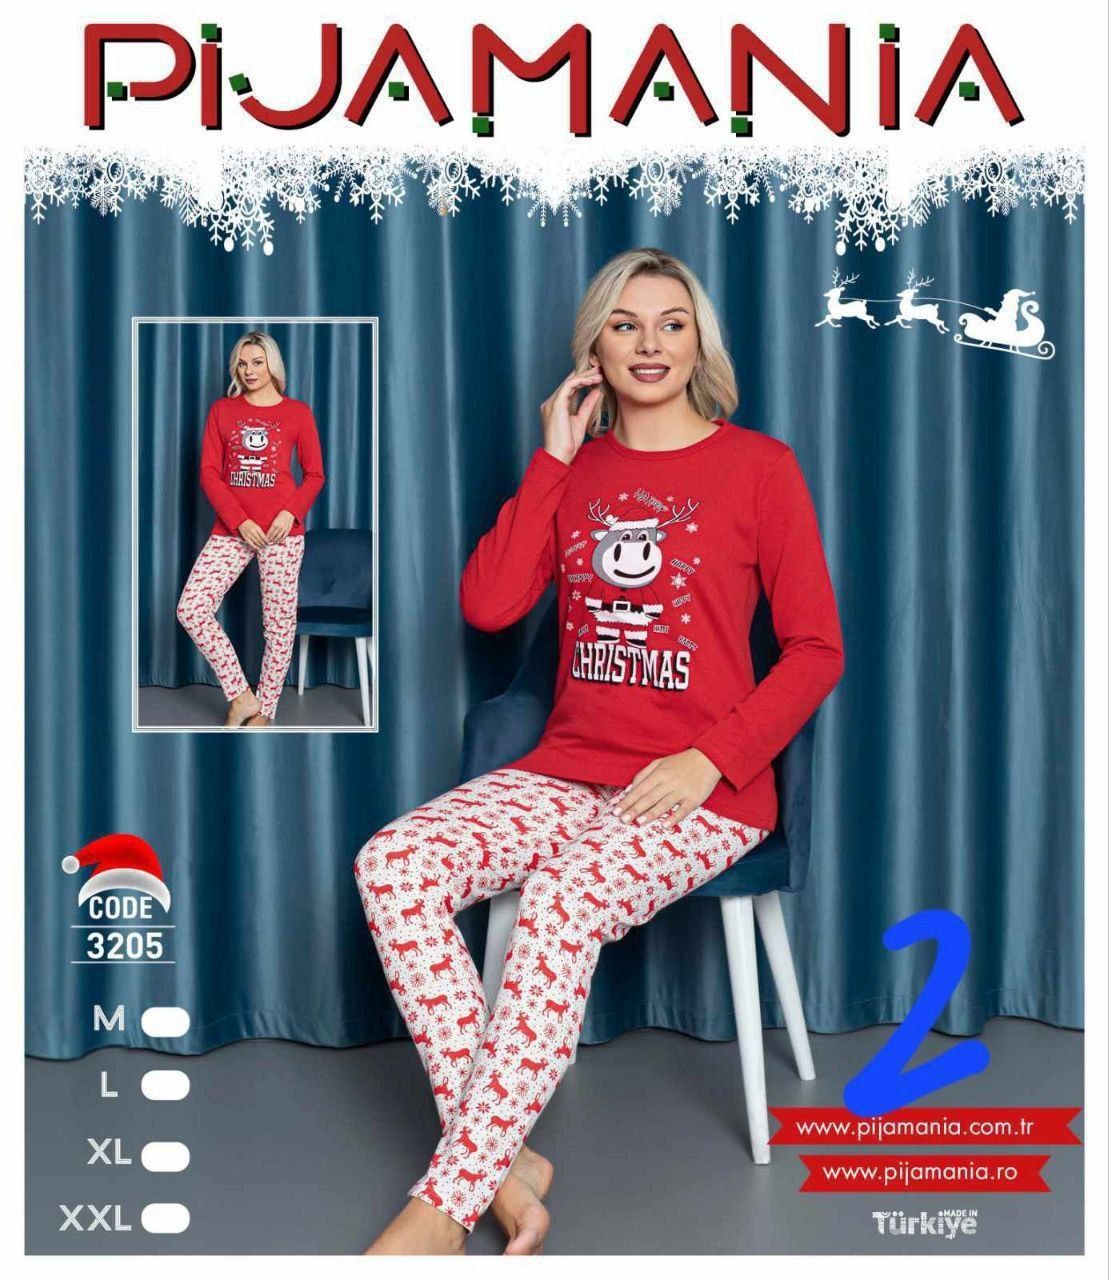 Pijamale dama tematica
Usor vatuite

Pinguini- l xl xxl
Mery christmas